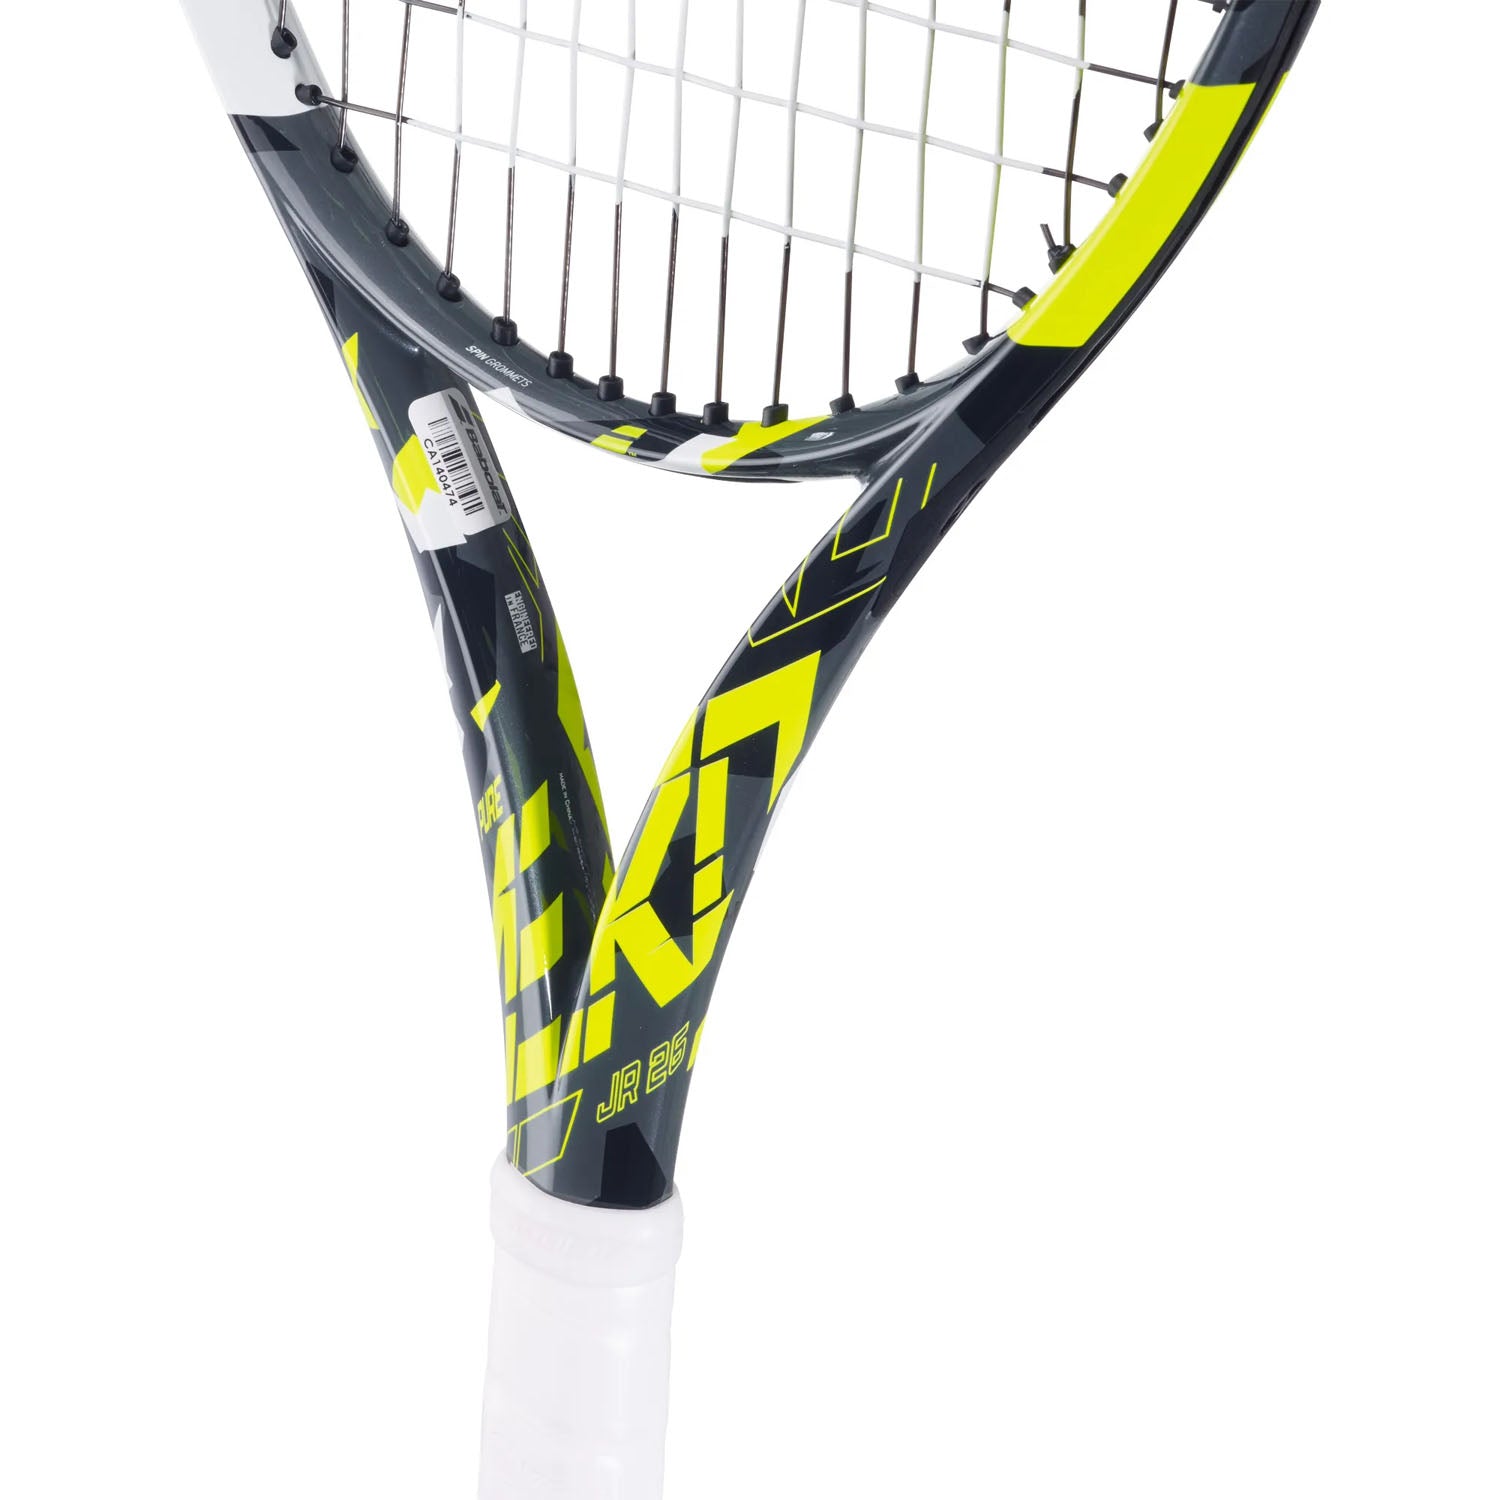 Babolat Pure Aero Junior 26 S CV Tennis Racquet - Best Price online Prokicksports.com